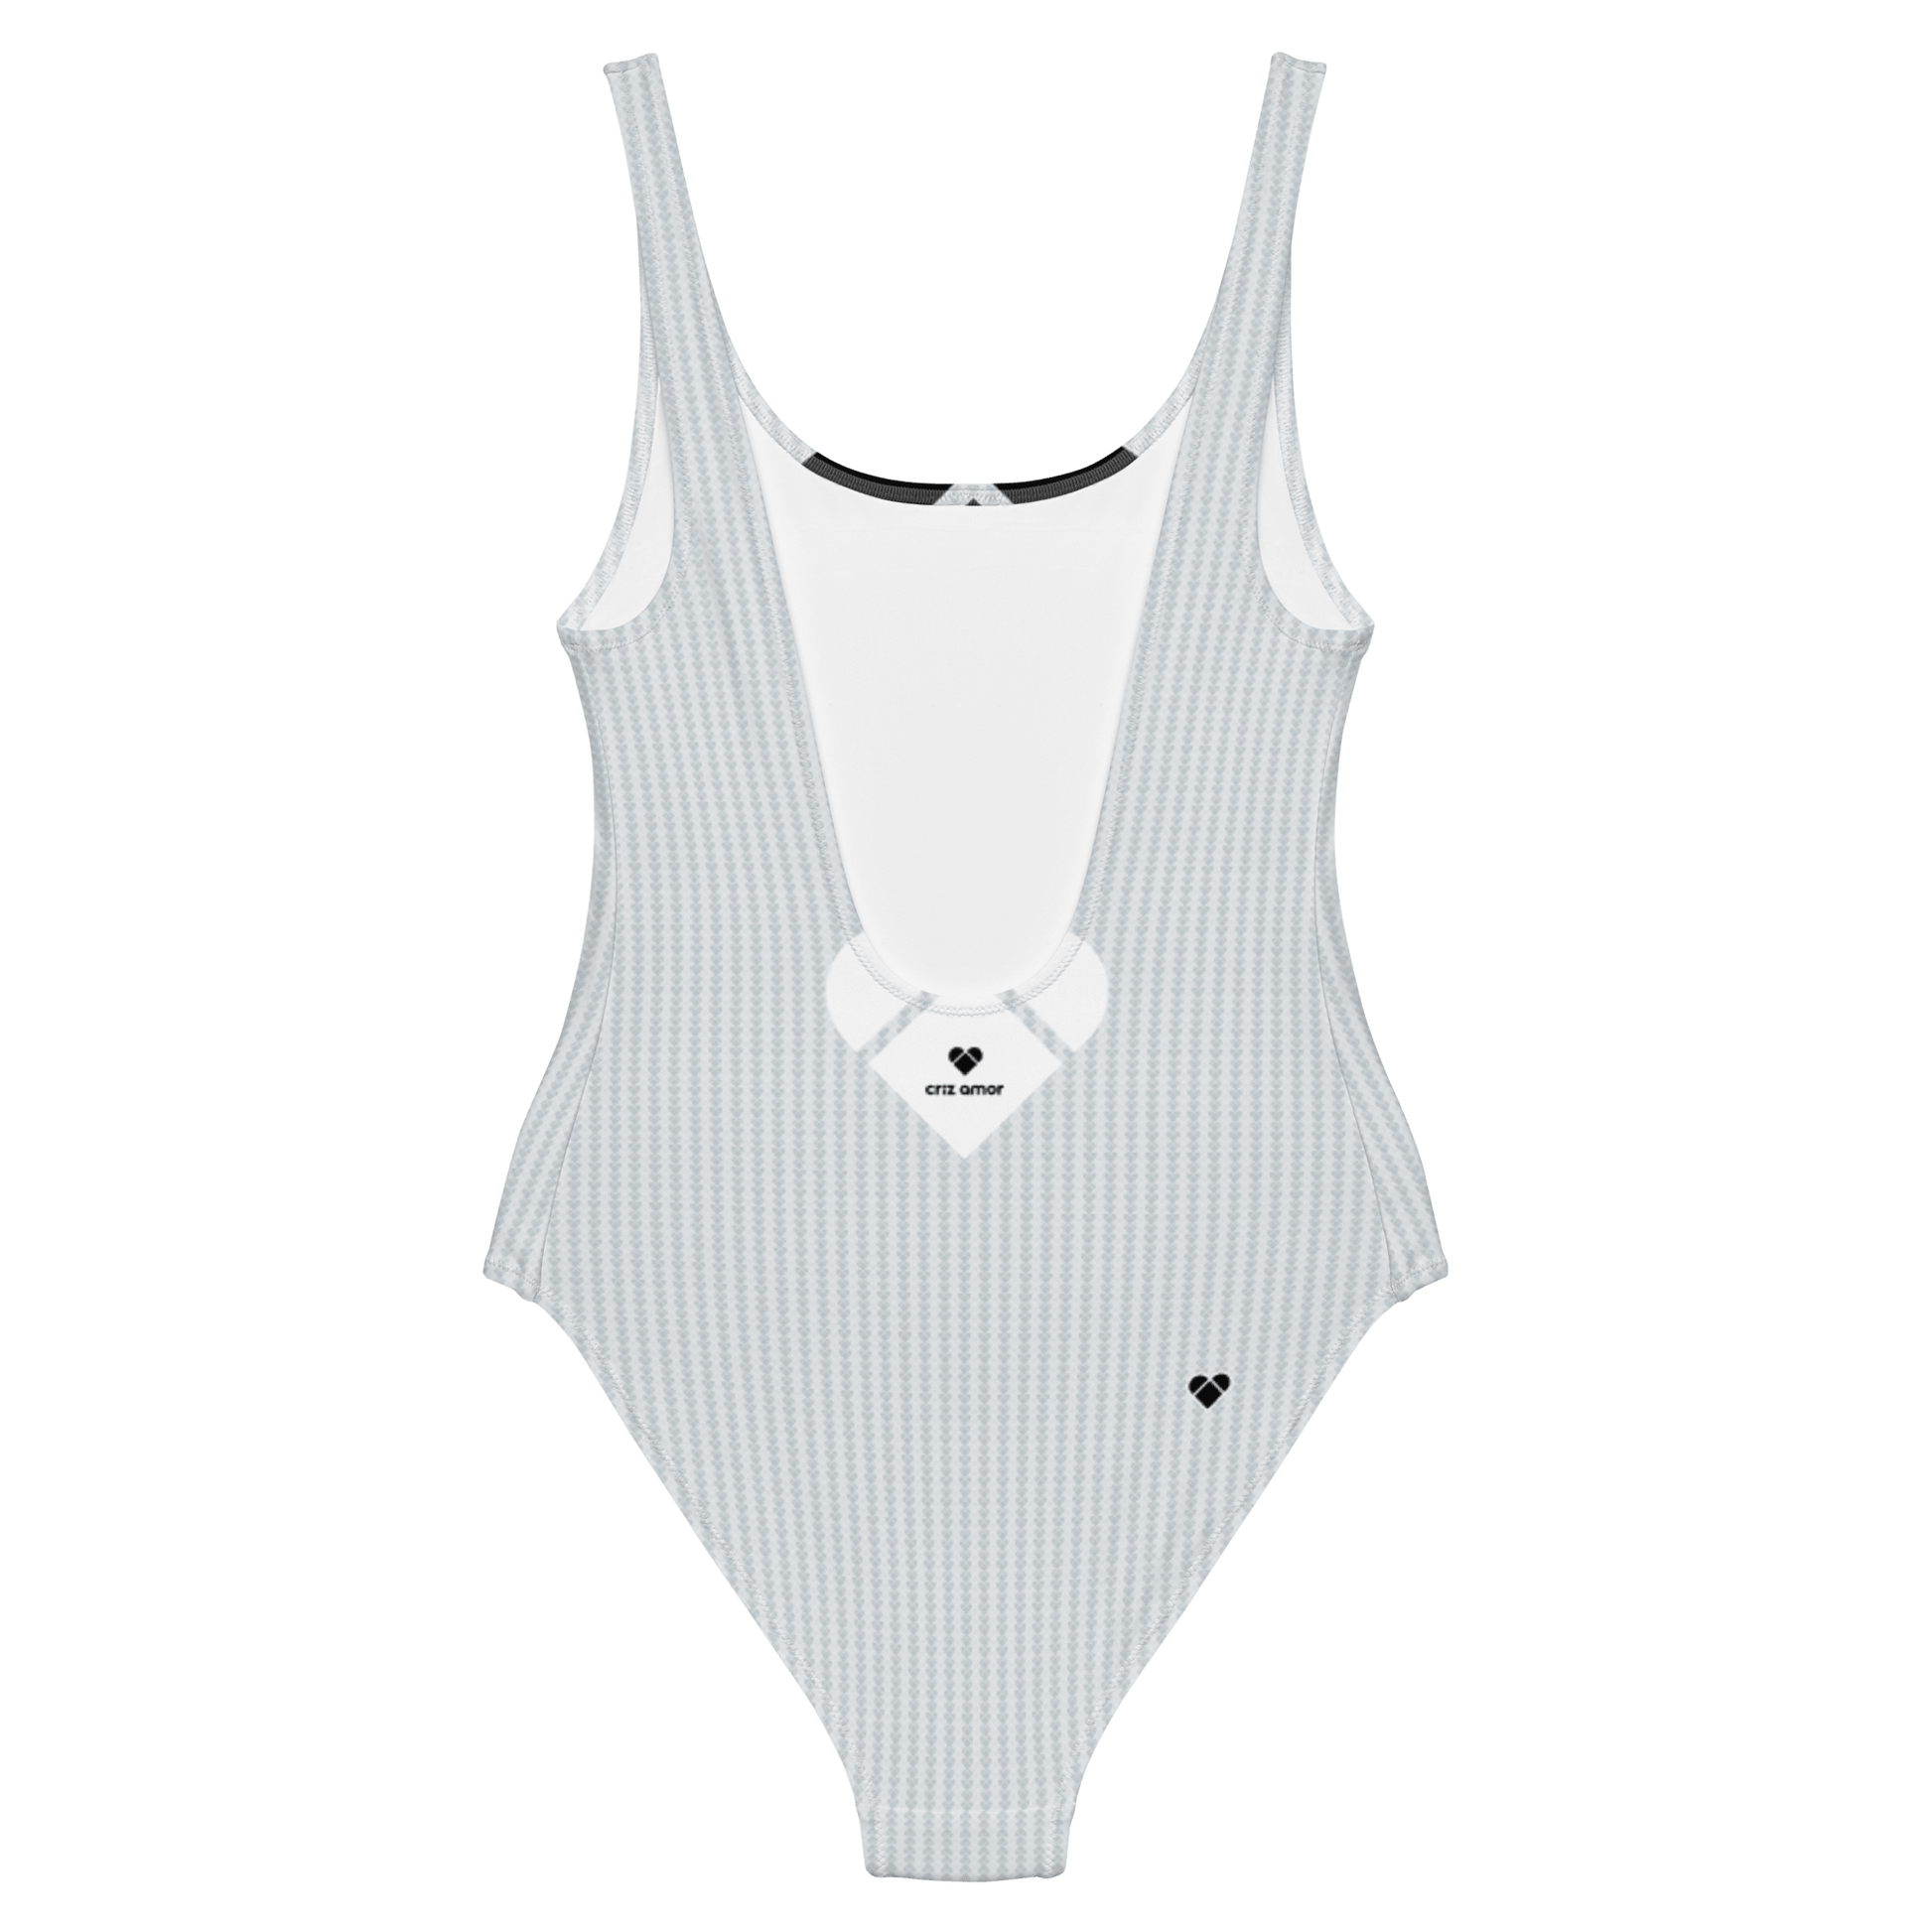 Amor Primero women's swimsuit featuring Lovogram heart logo design